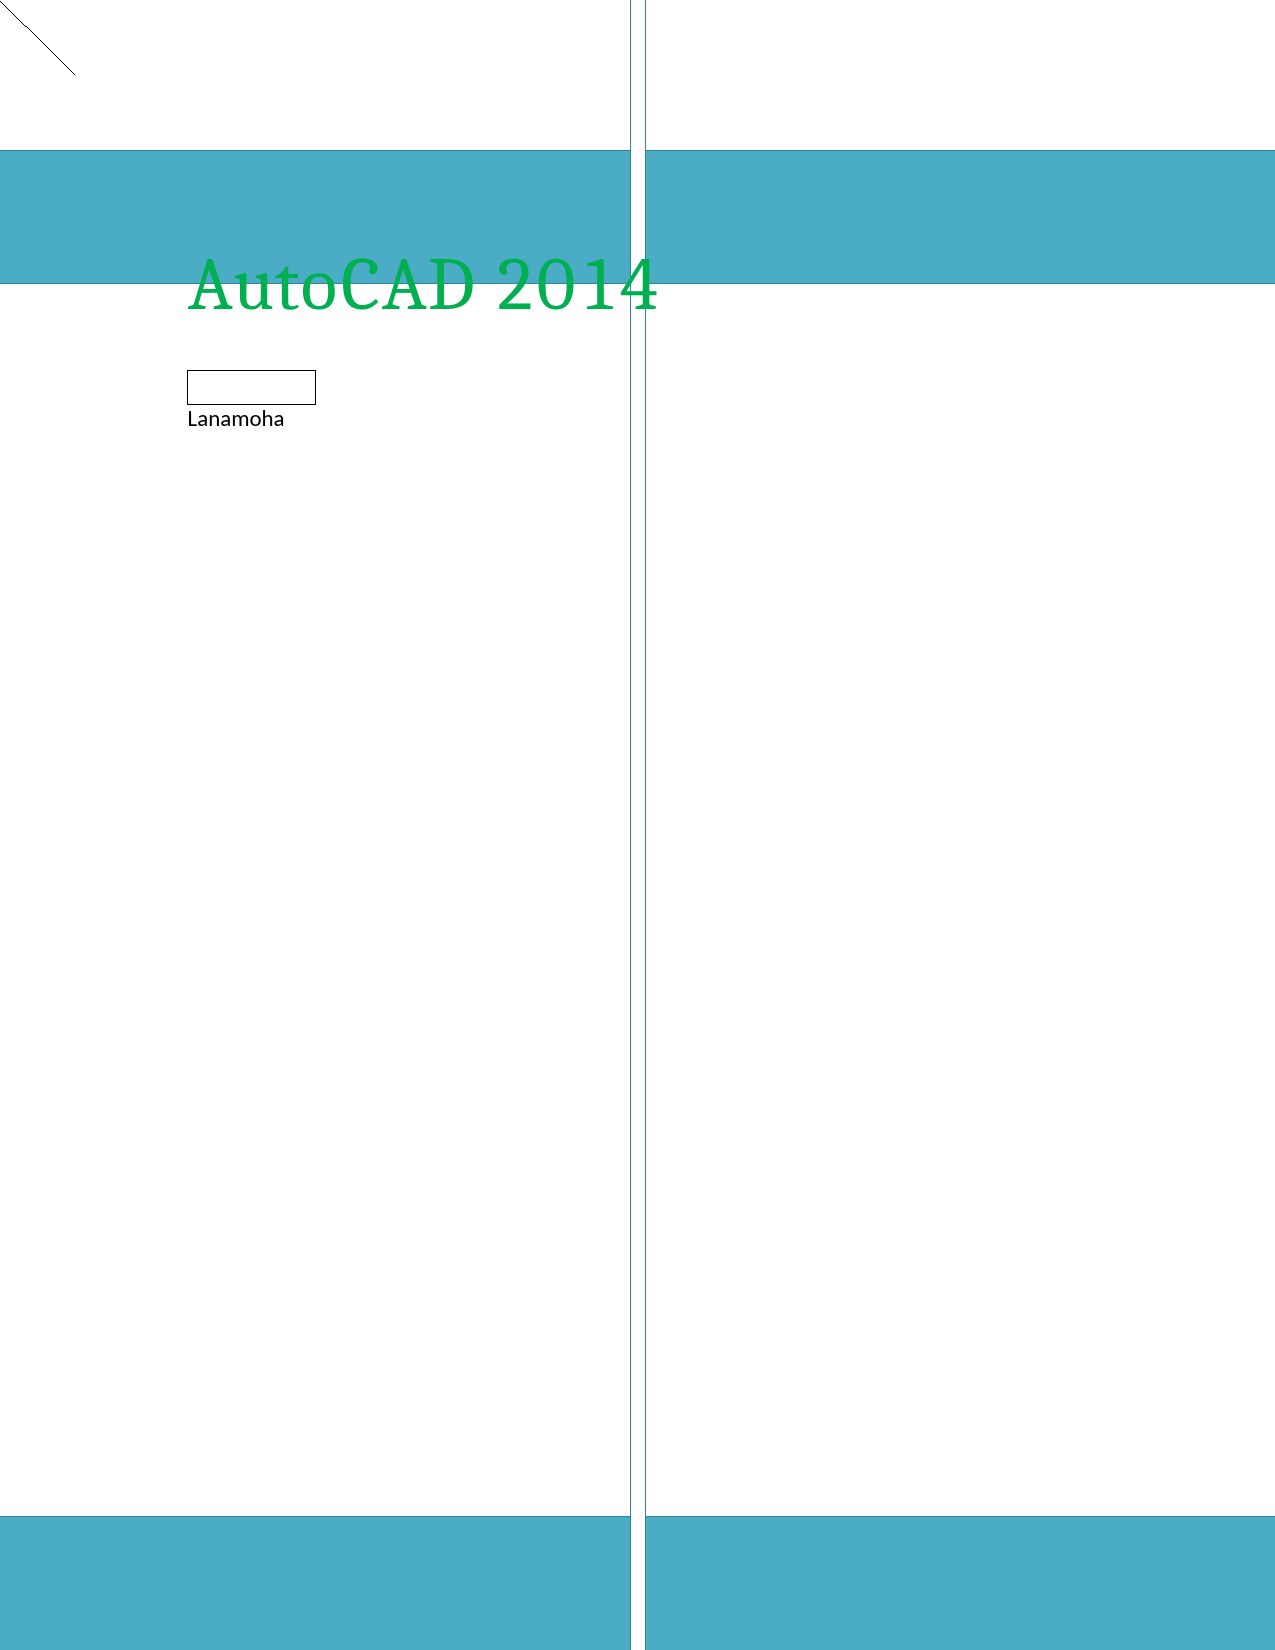 تنزيل وتحميل كتاِب AutoCad 2014 pdf برابط مباشر مجاناً